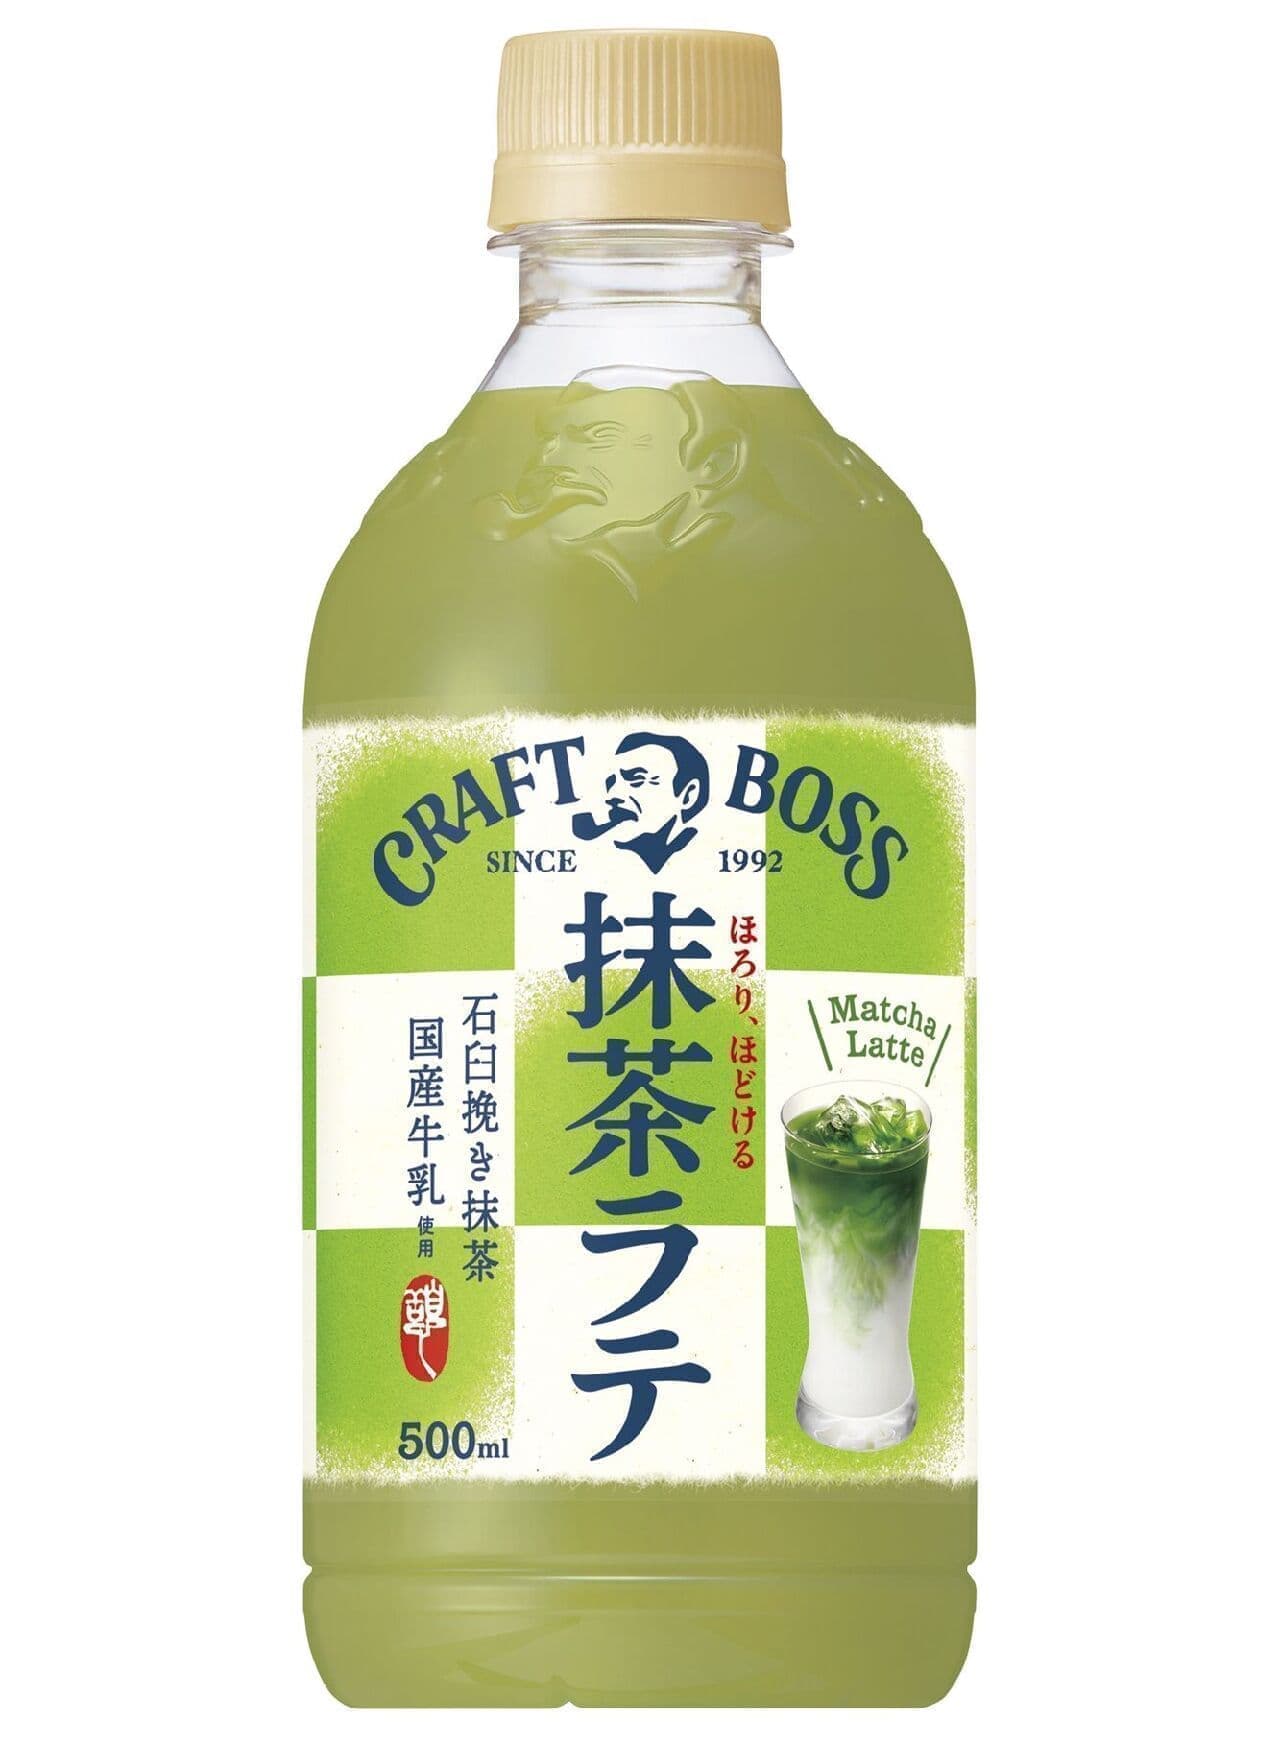 Suntory Foods "Craft Boss Matcha Latte"